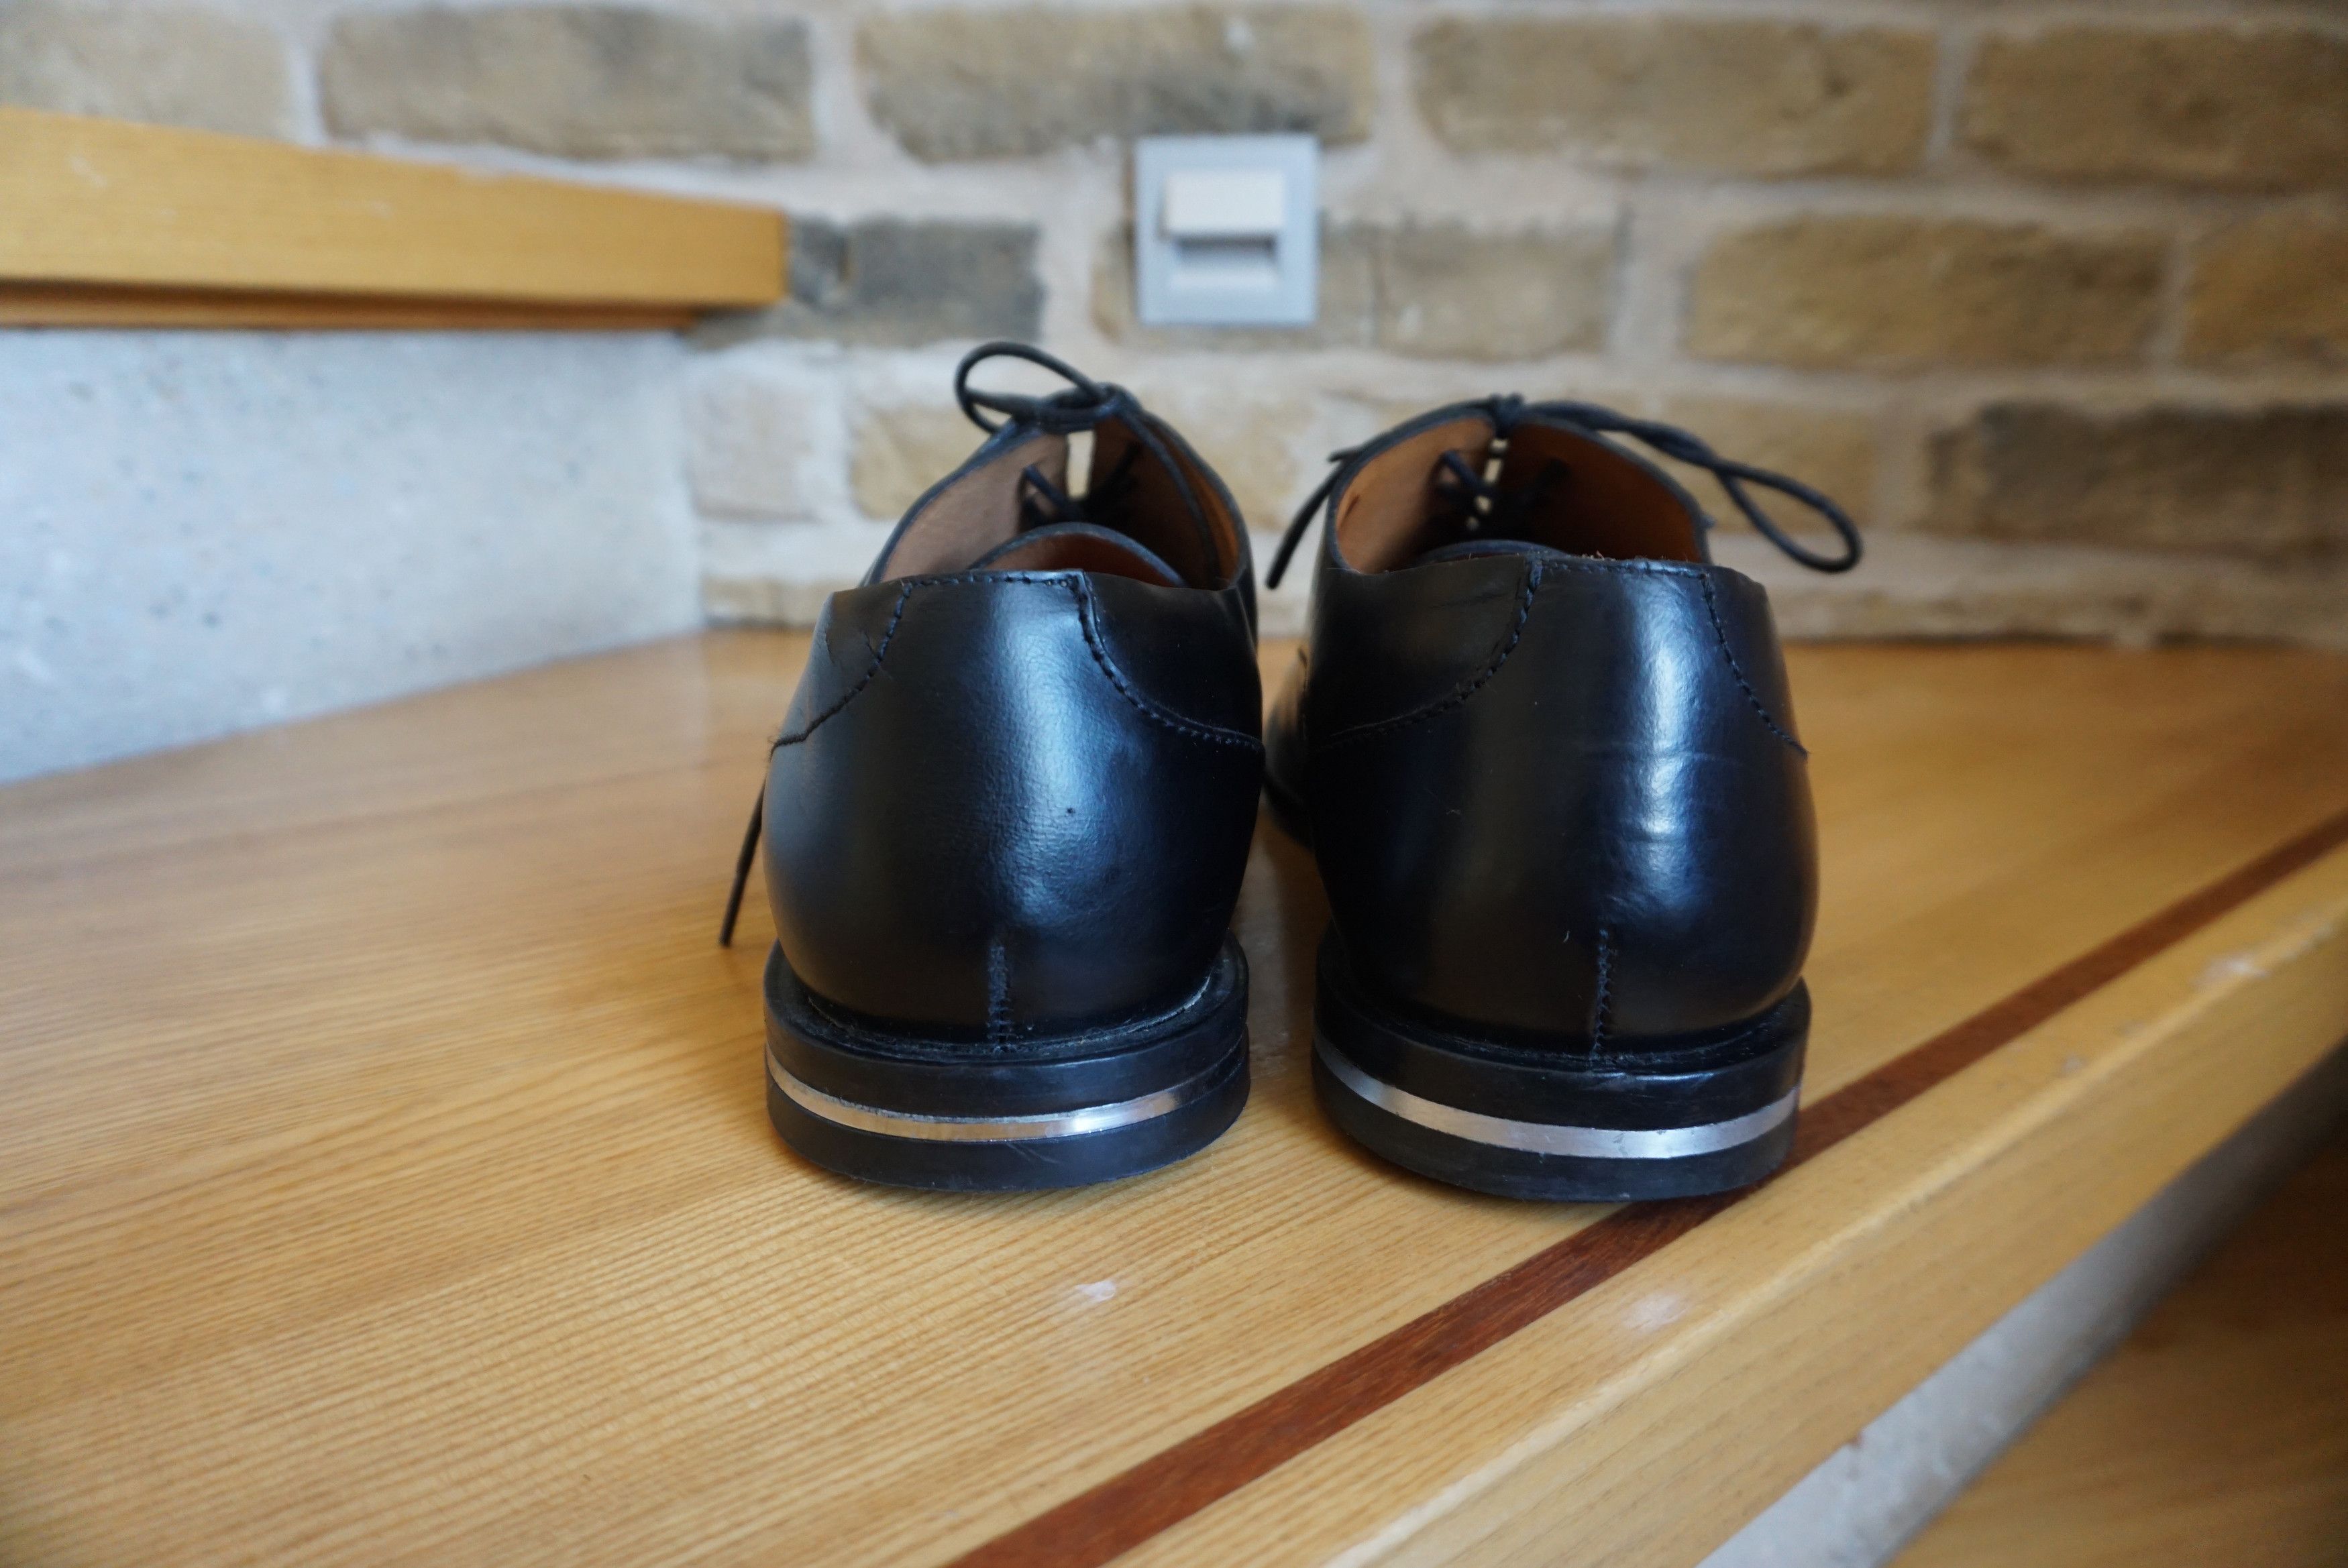 Cos COS RPR$250 leather office shoes EU44 black formal lace up Size US 10.5 / EU 43-44 - 14 Thumbnail